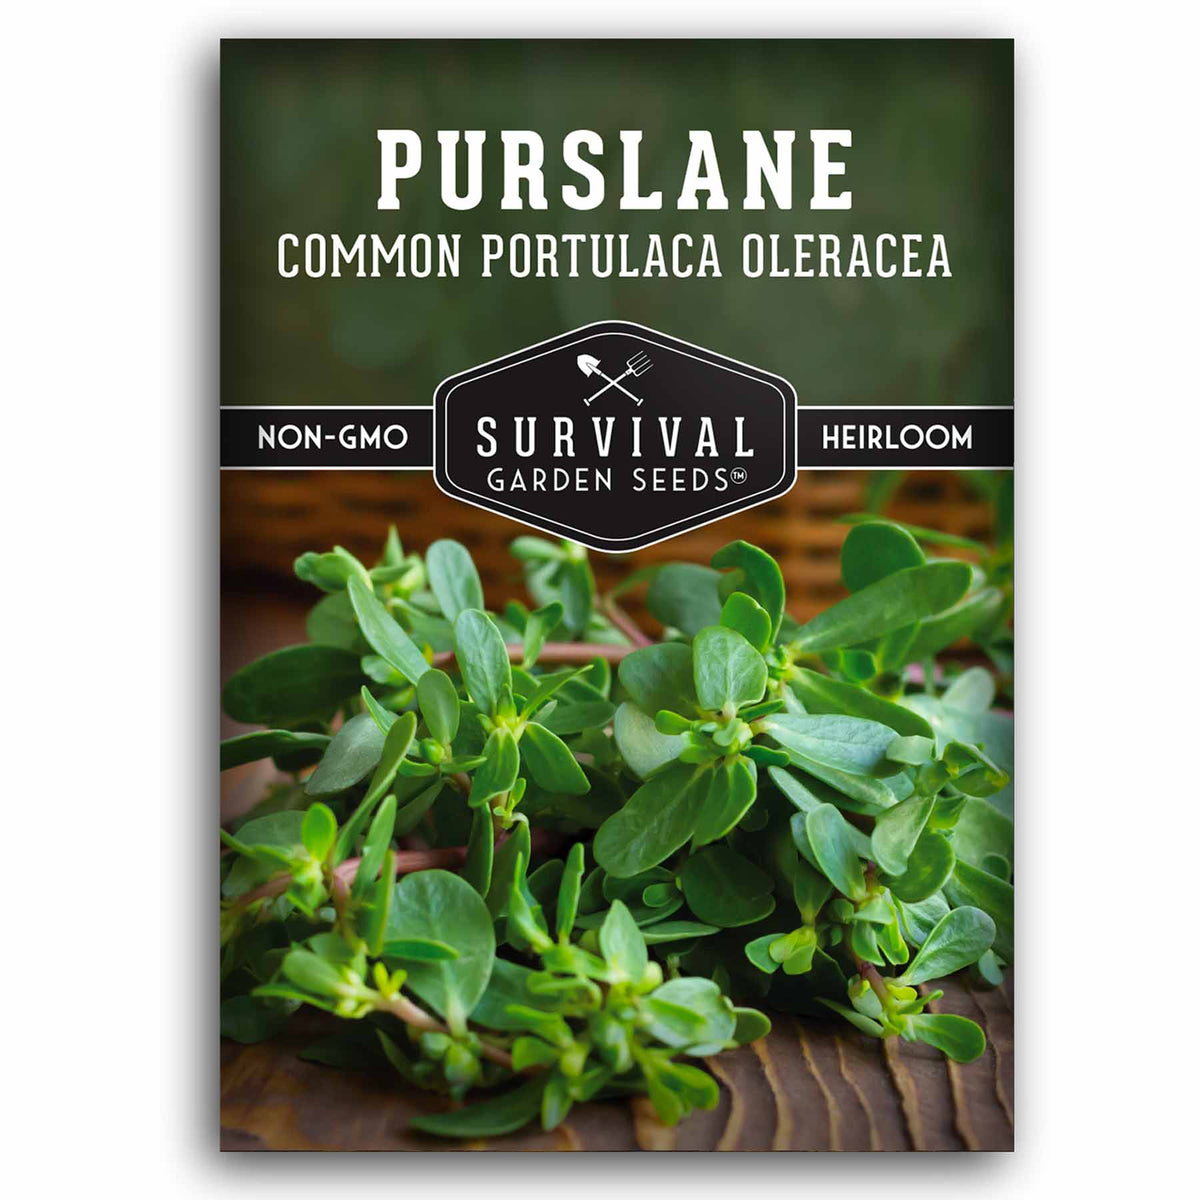 1 packet of Purslane seeds